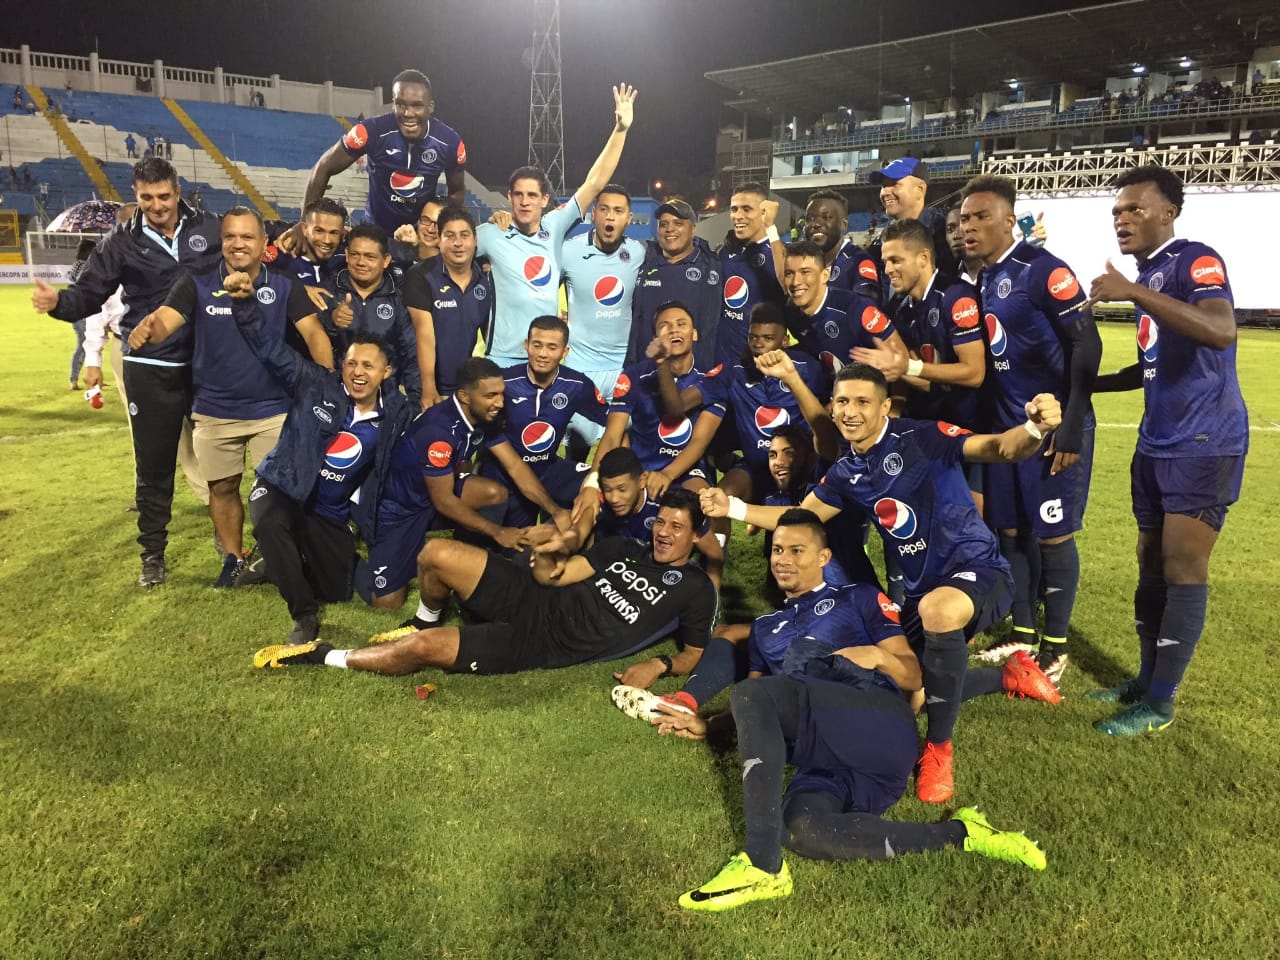 Registro del FC Motagua en la historia del fútbol hondureño